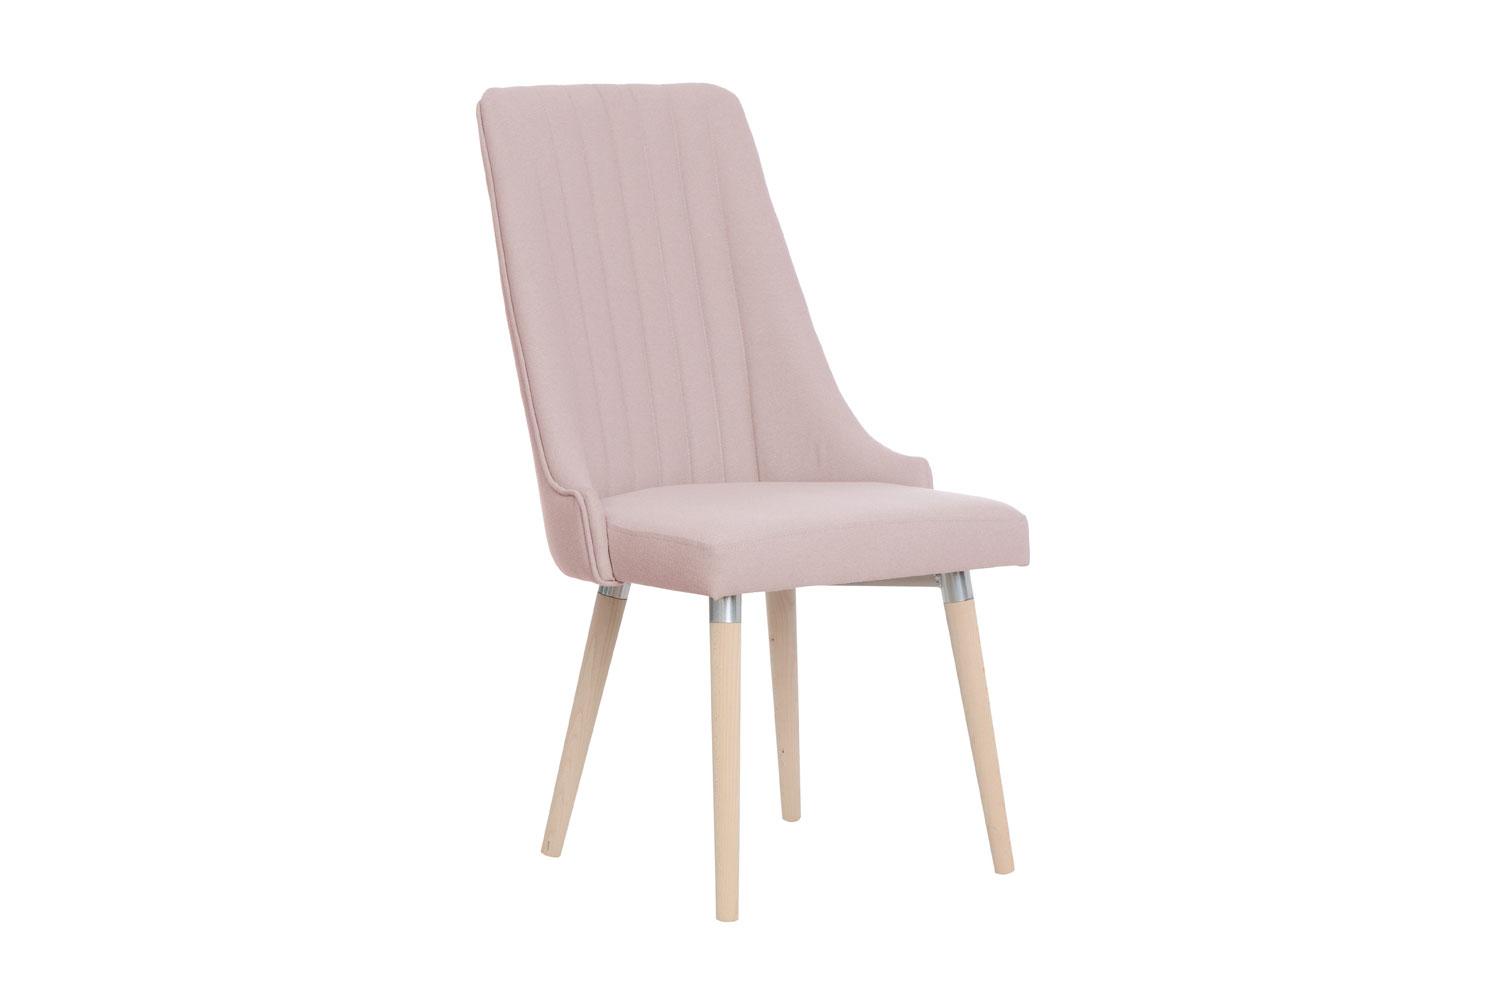 Luxxer Luxusní židle Paul - různé barvy